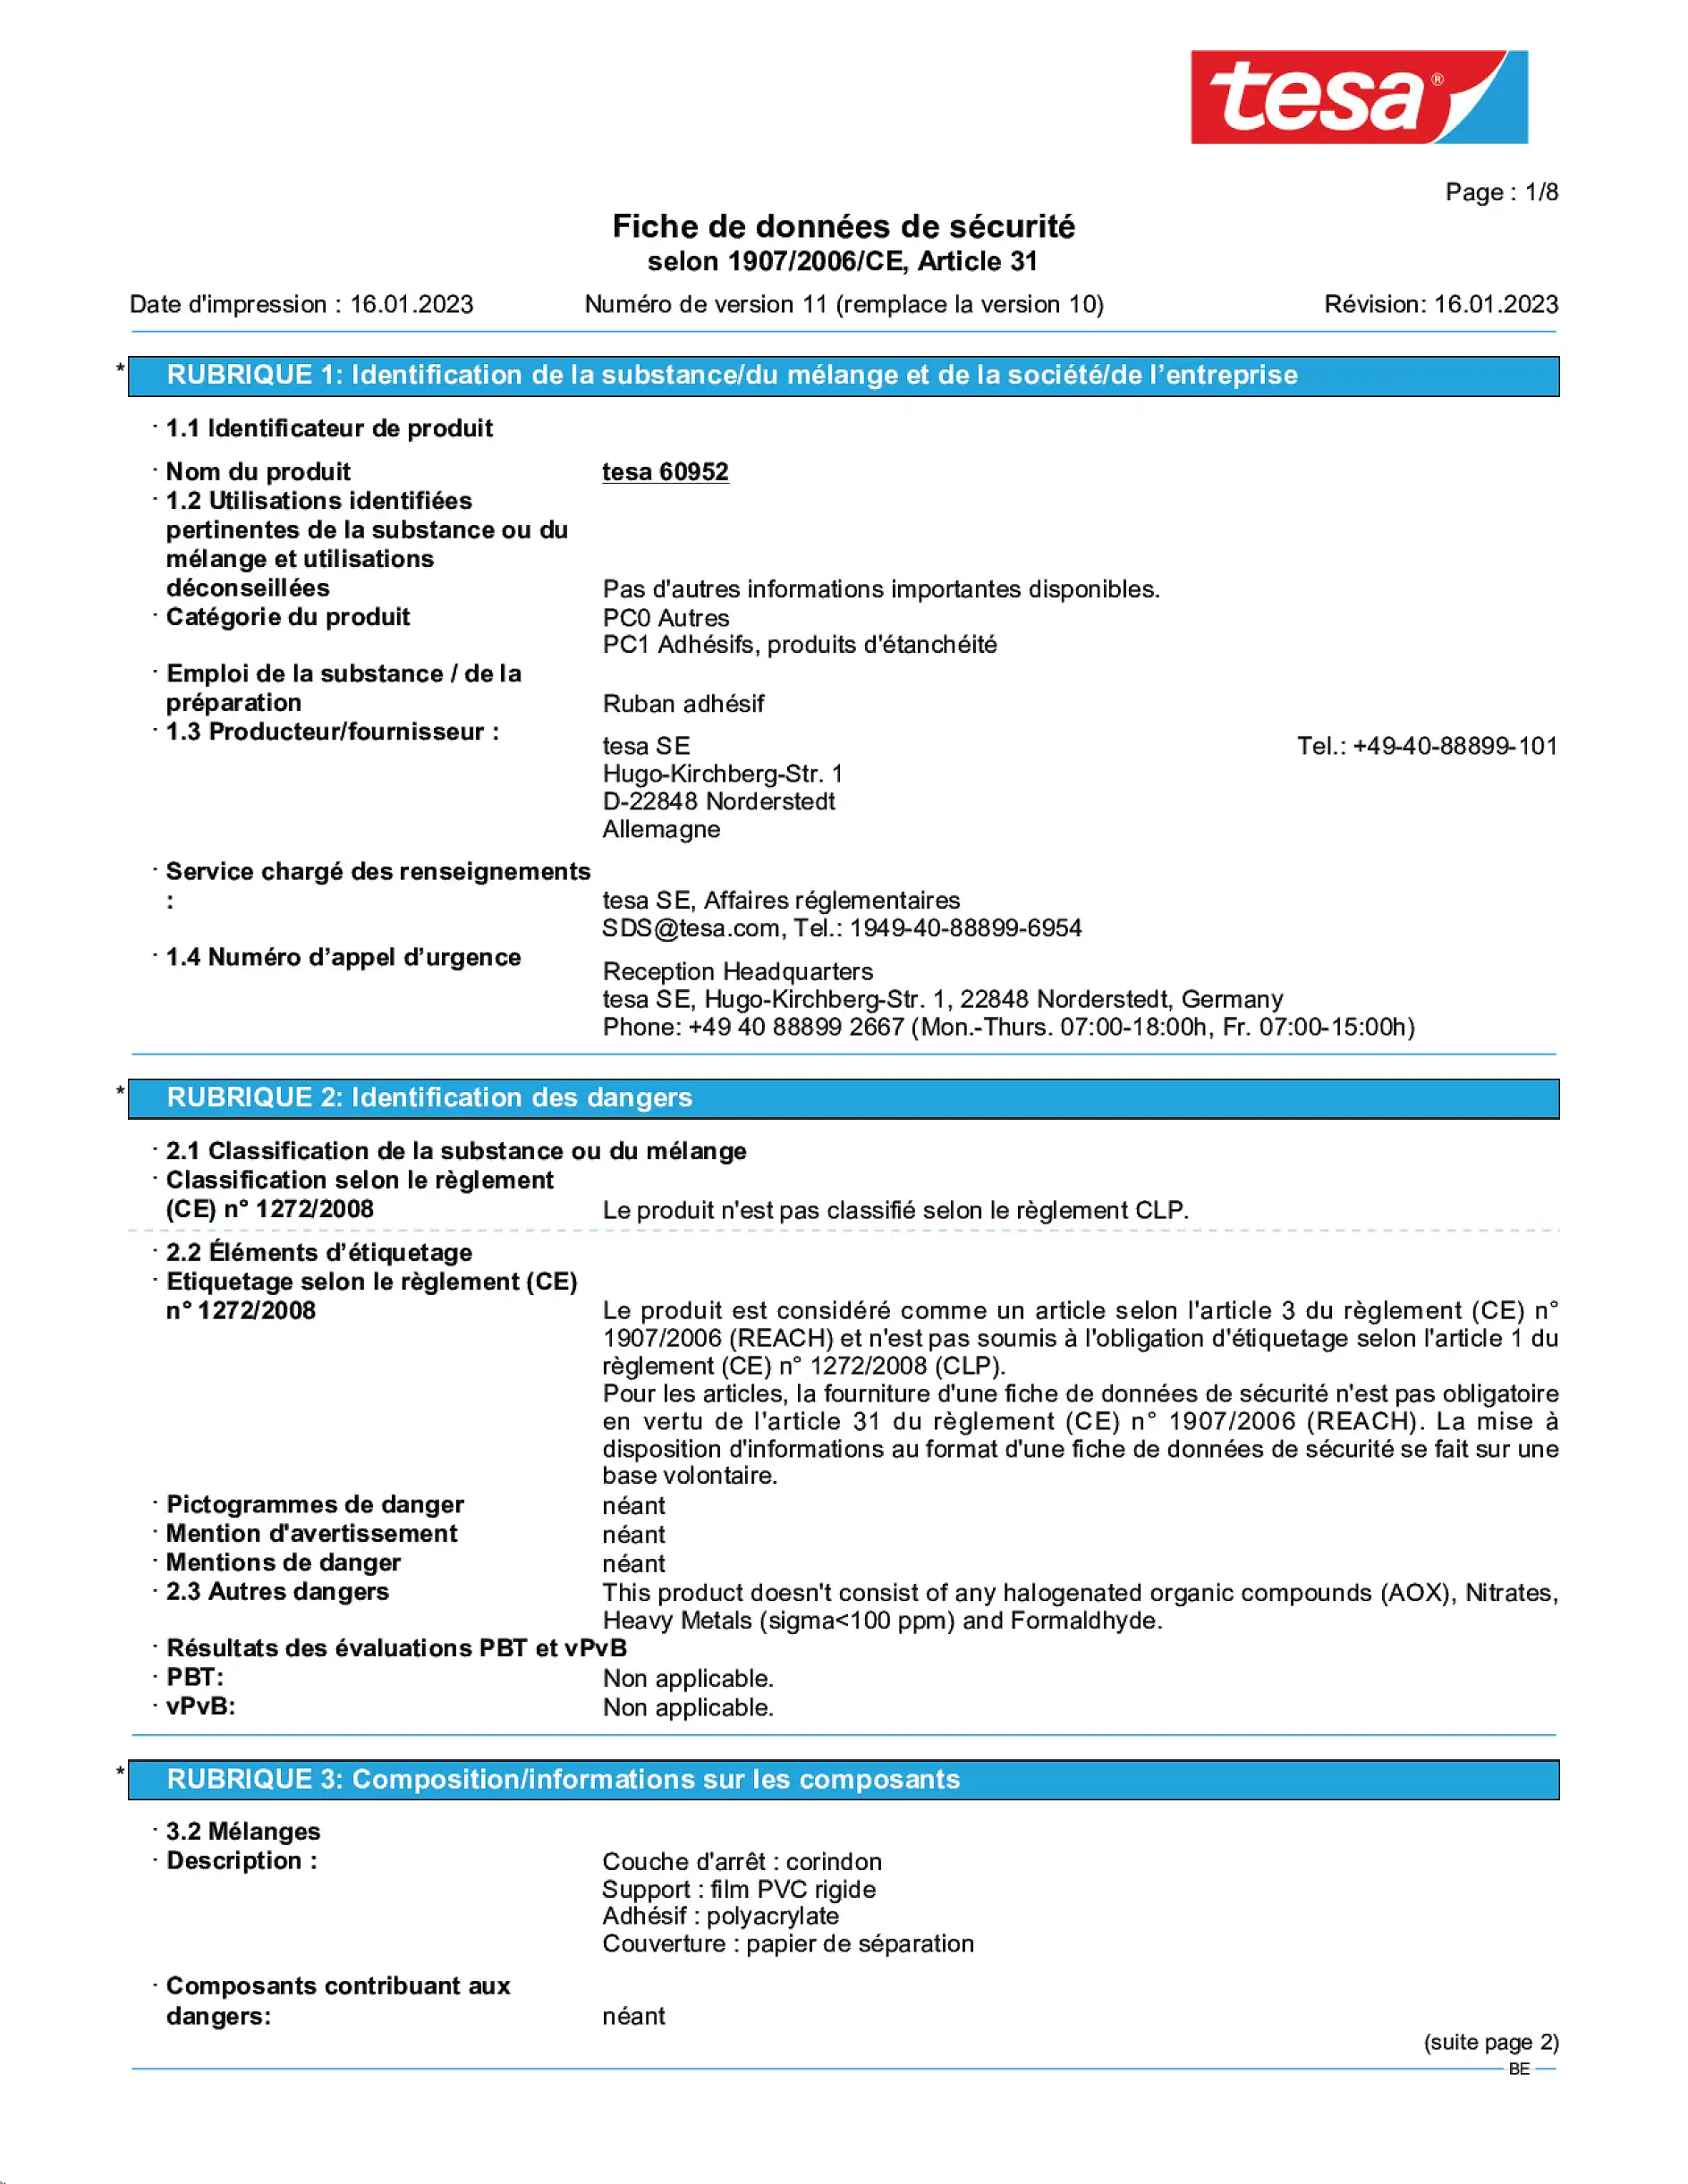 Safety data sheet_tesa® Professional 60950_nl-BE_v11